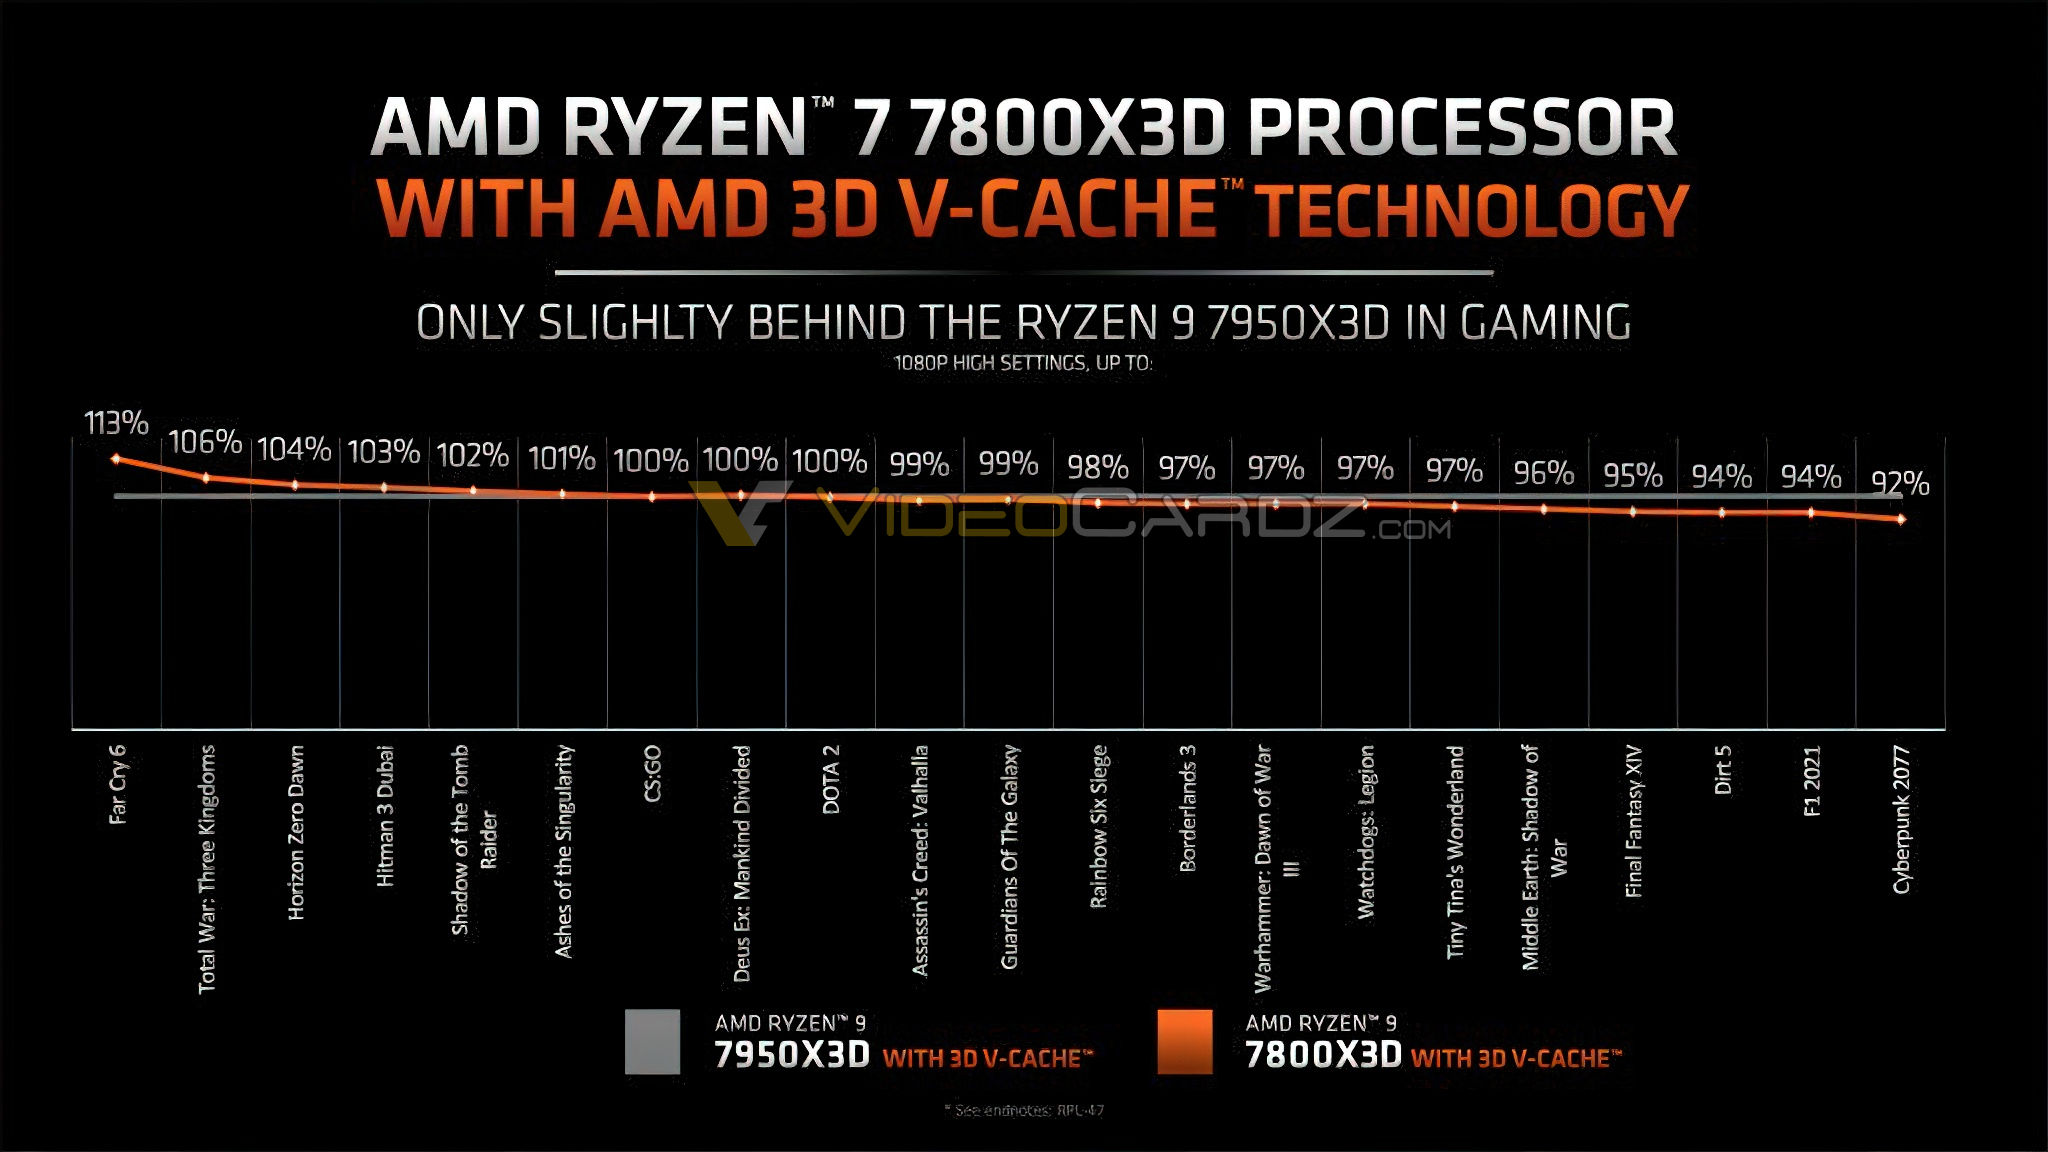 AMD Ryzen 7 7800X3D vs Ryzen 9 7950X3D